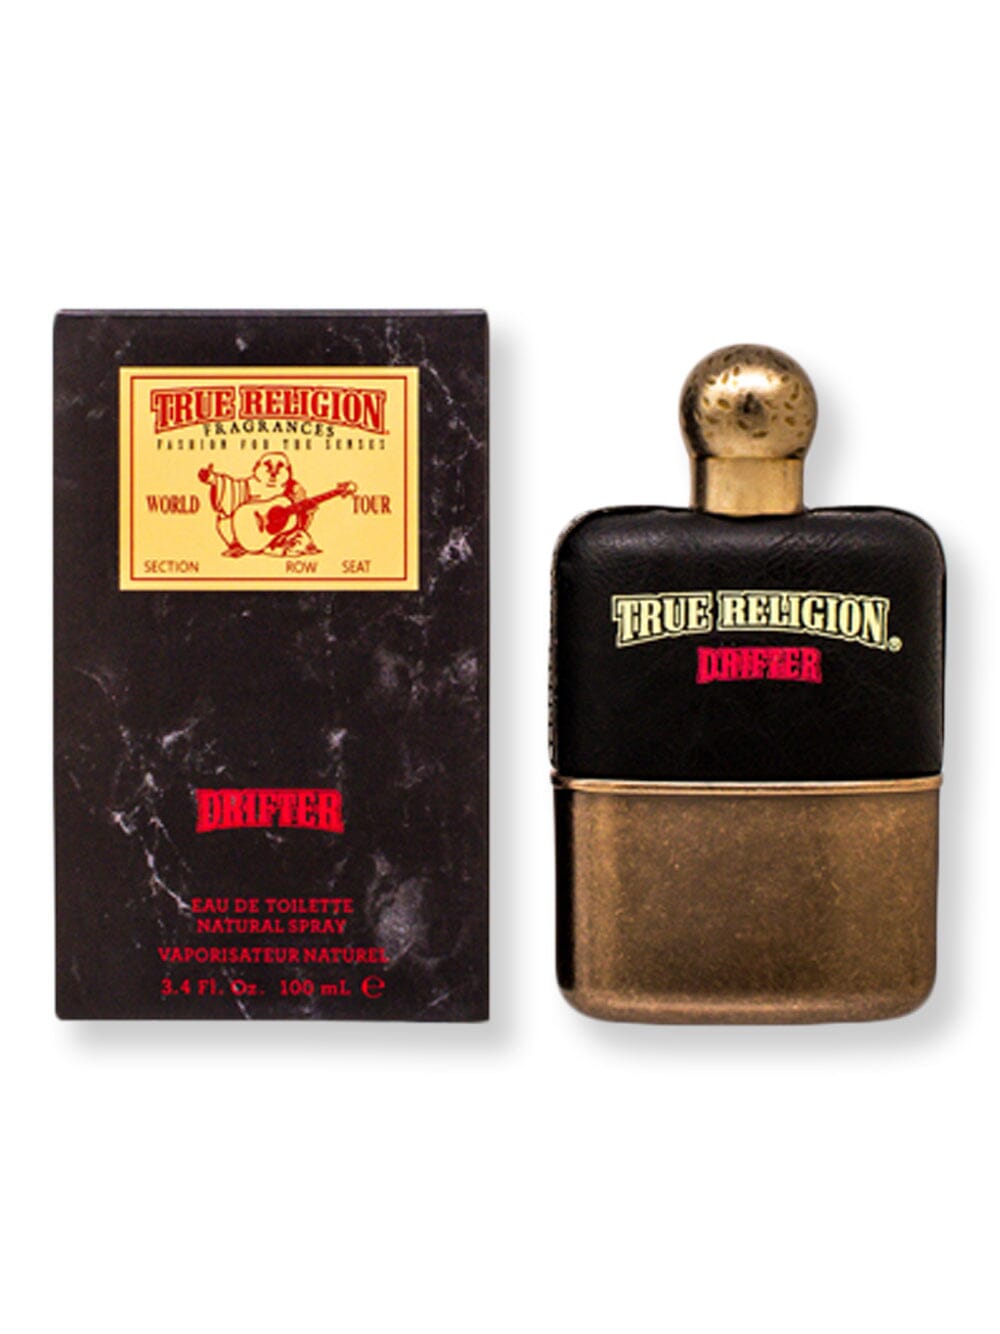 True Religion True Religion Drifter EDT Spray 3.4 oz Perfume 